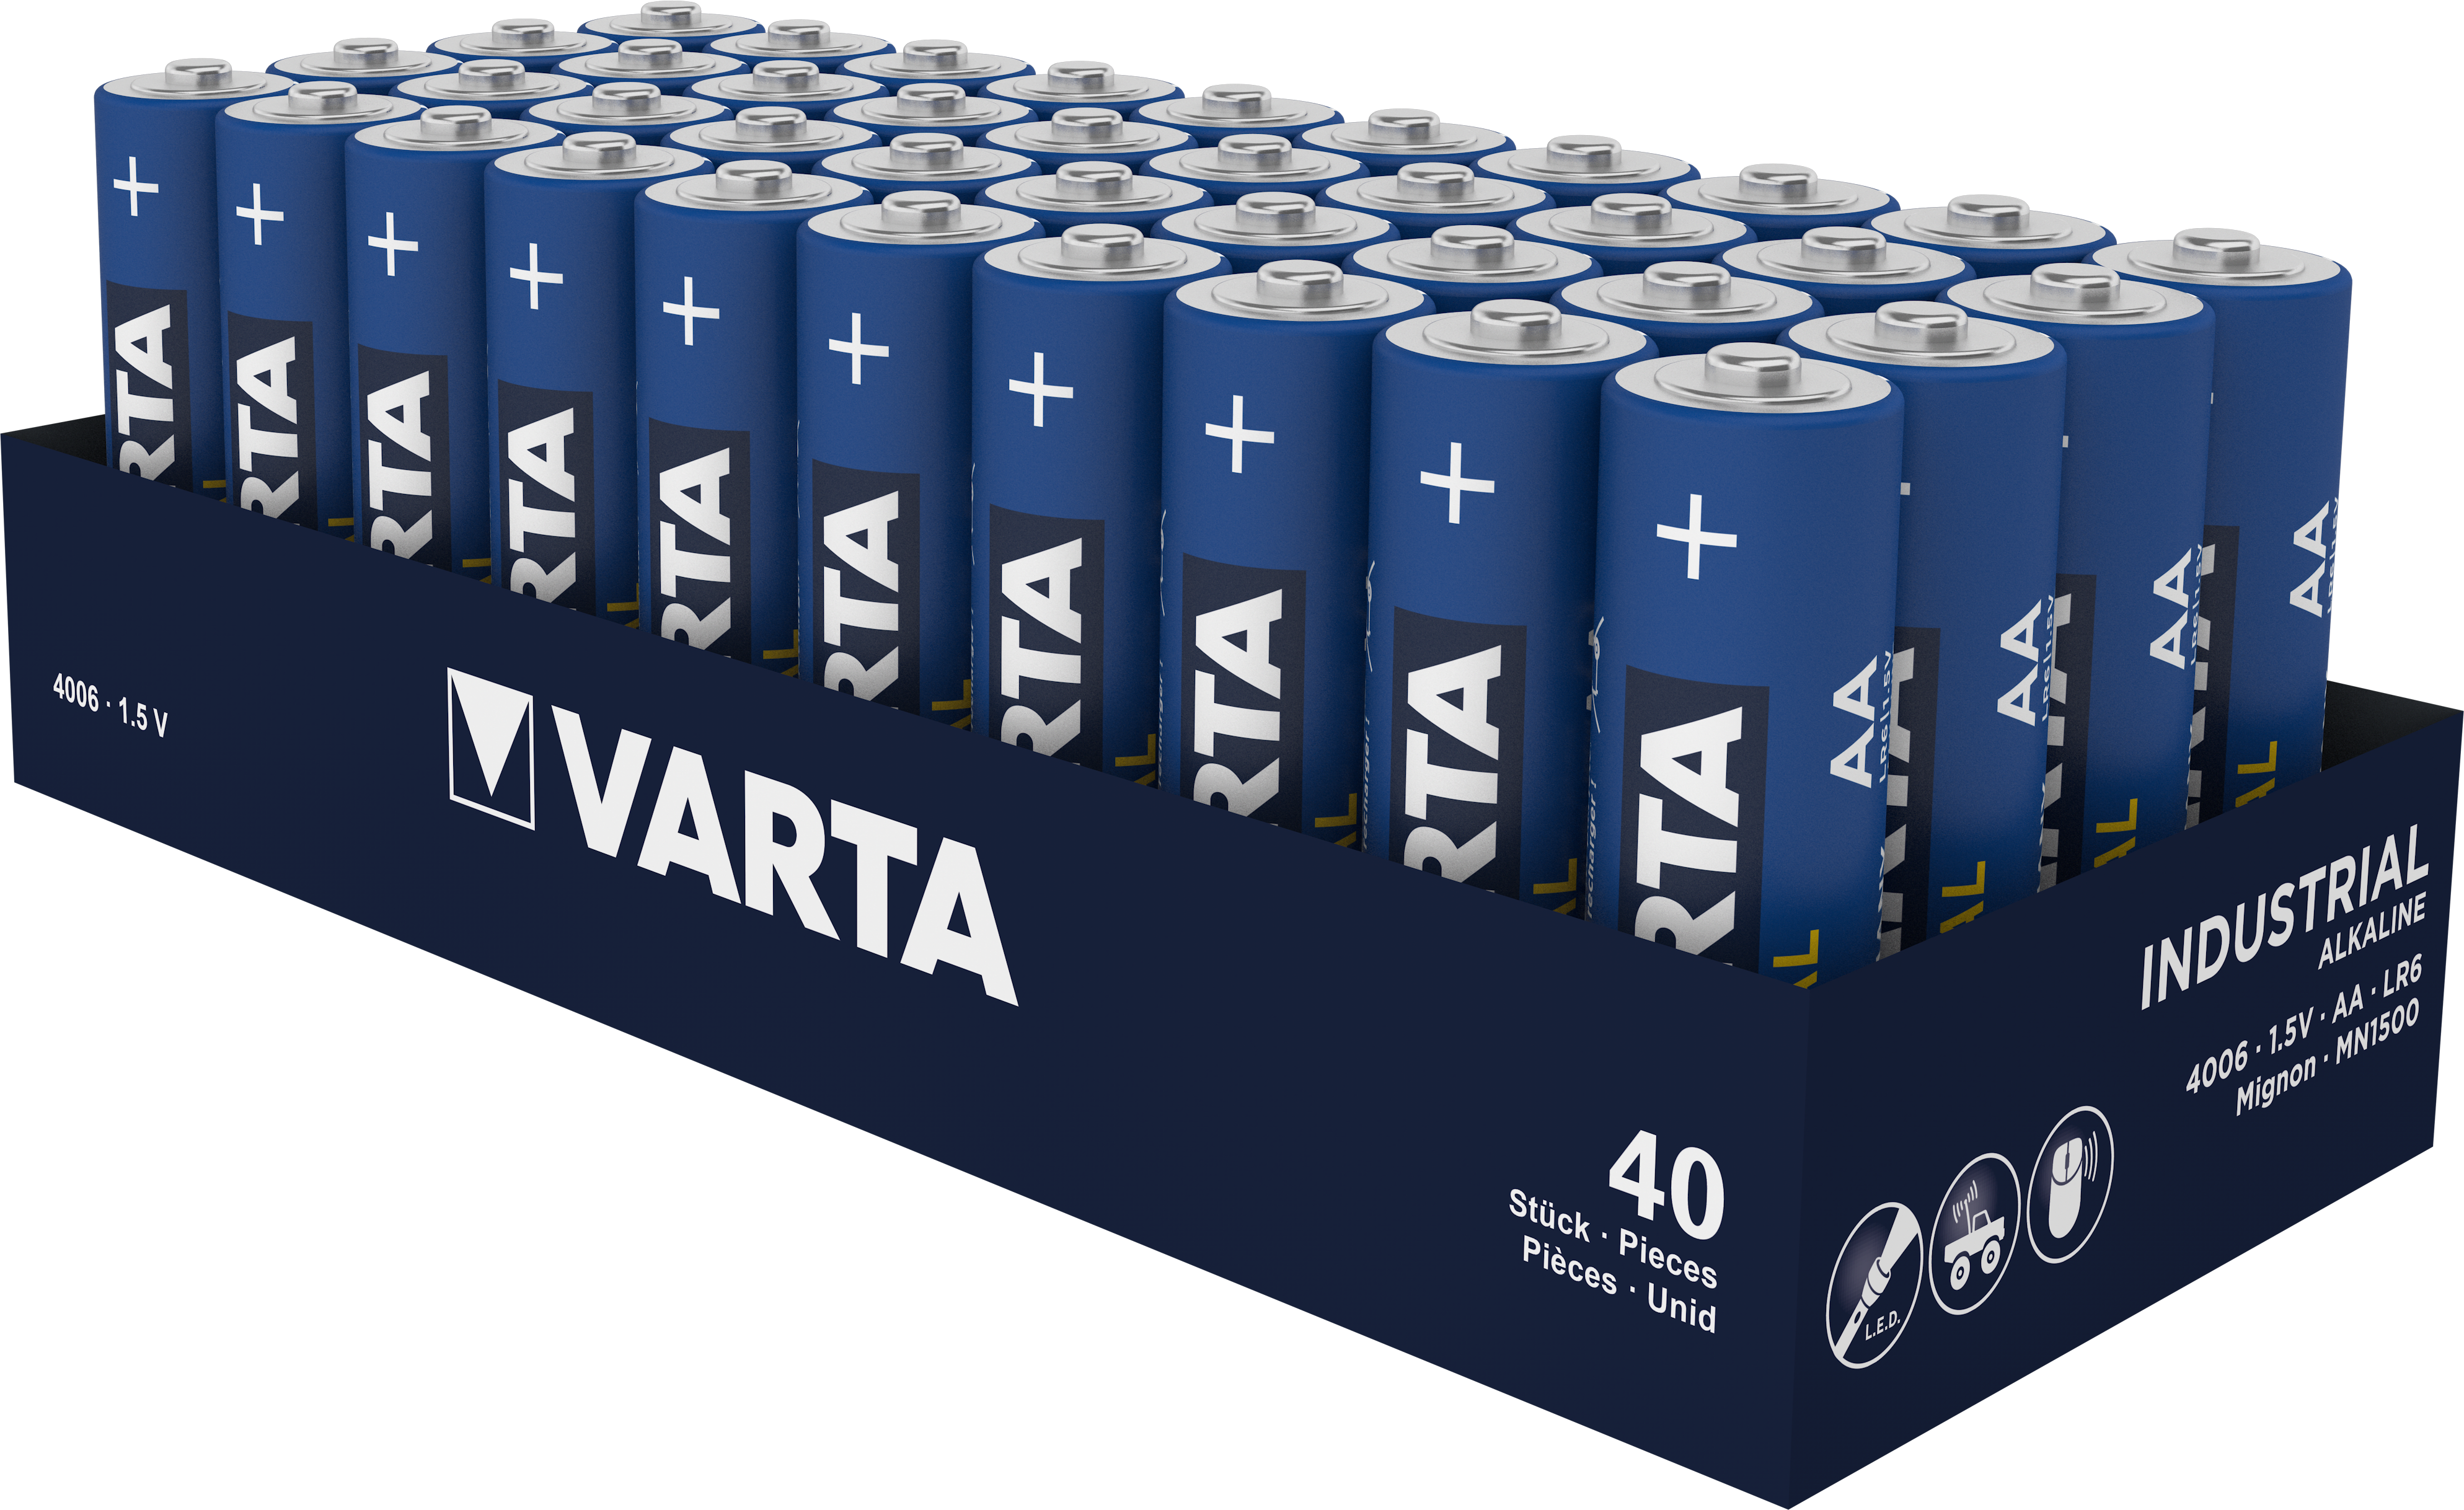 4 piles alcalines LR6 AA Varta